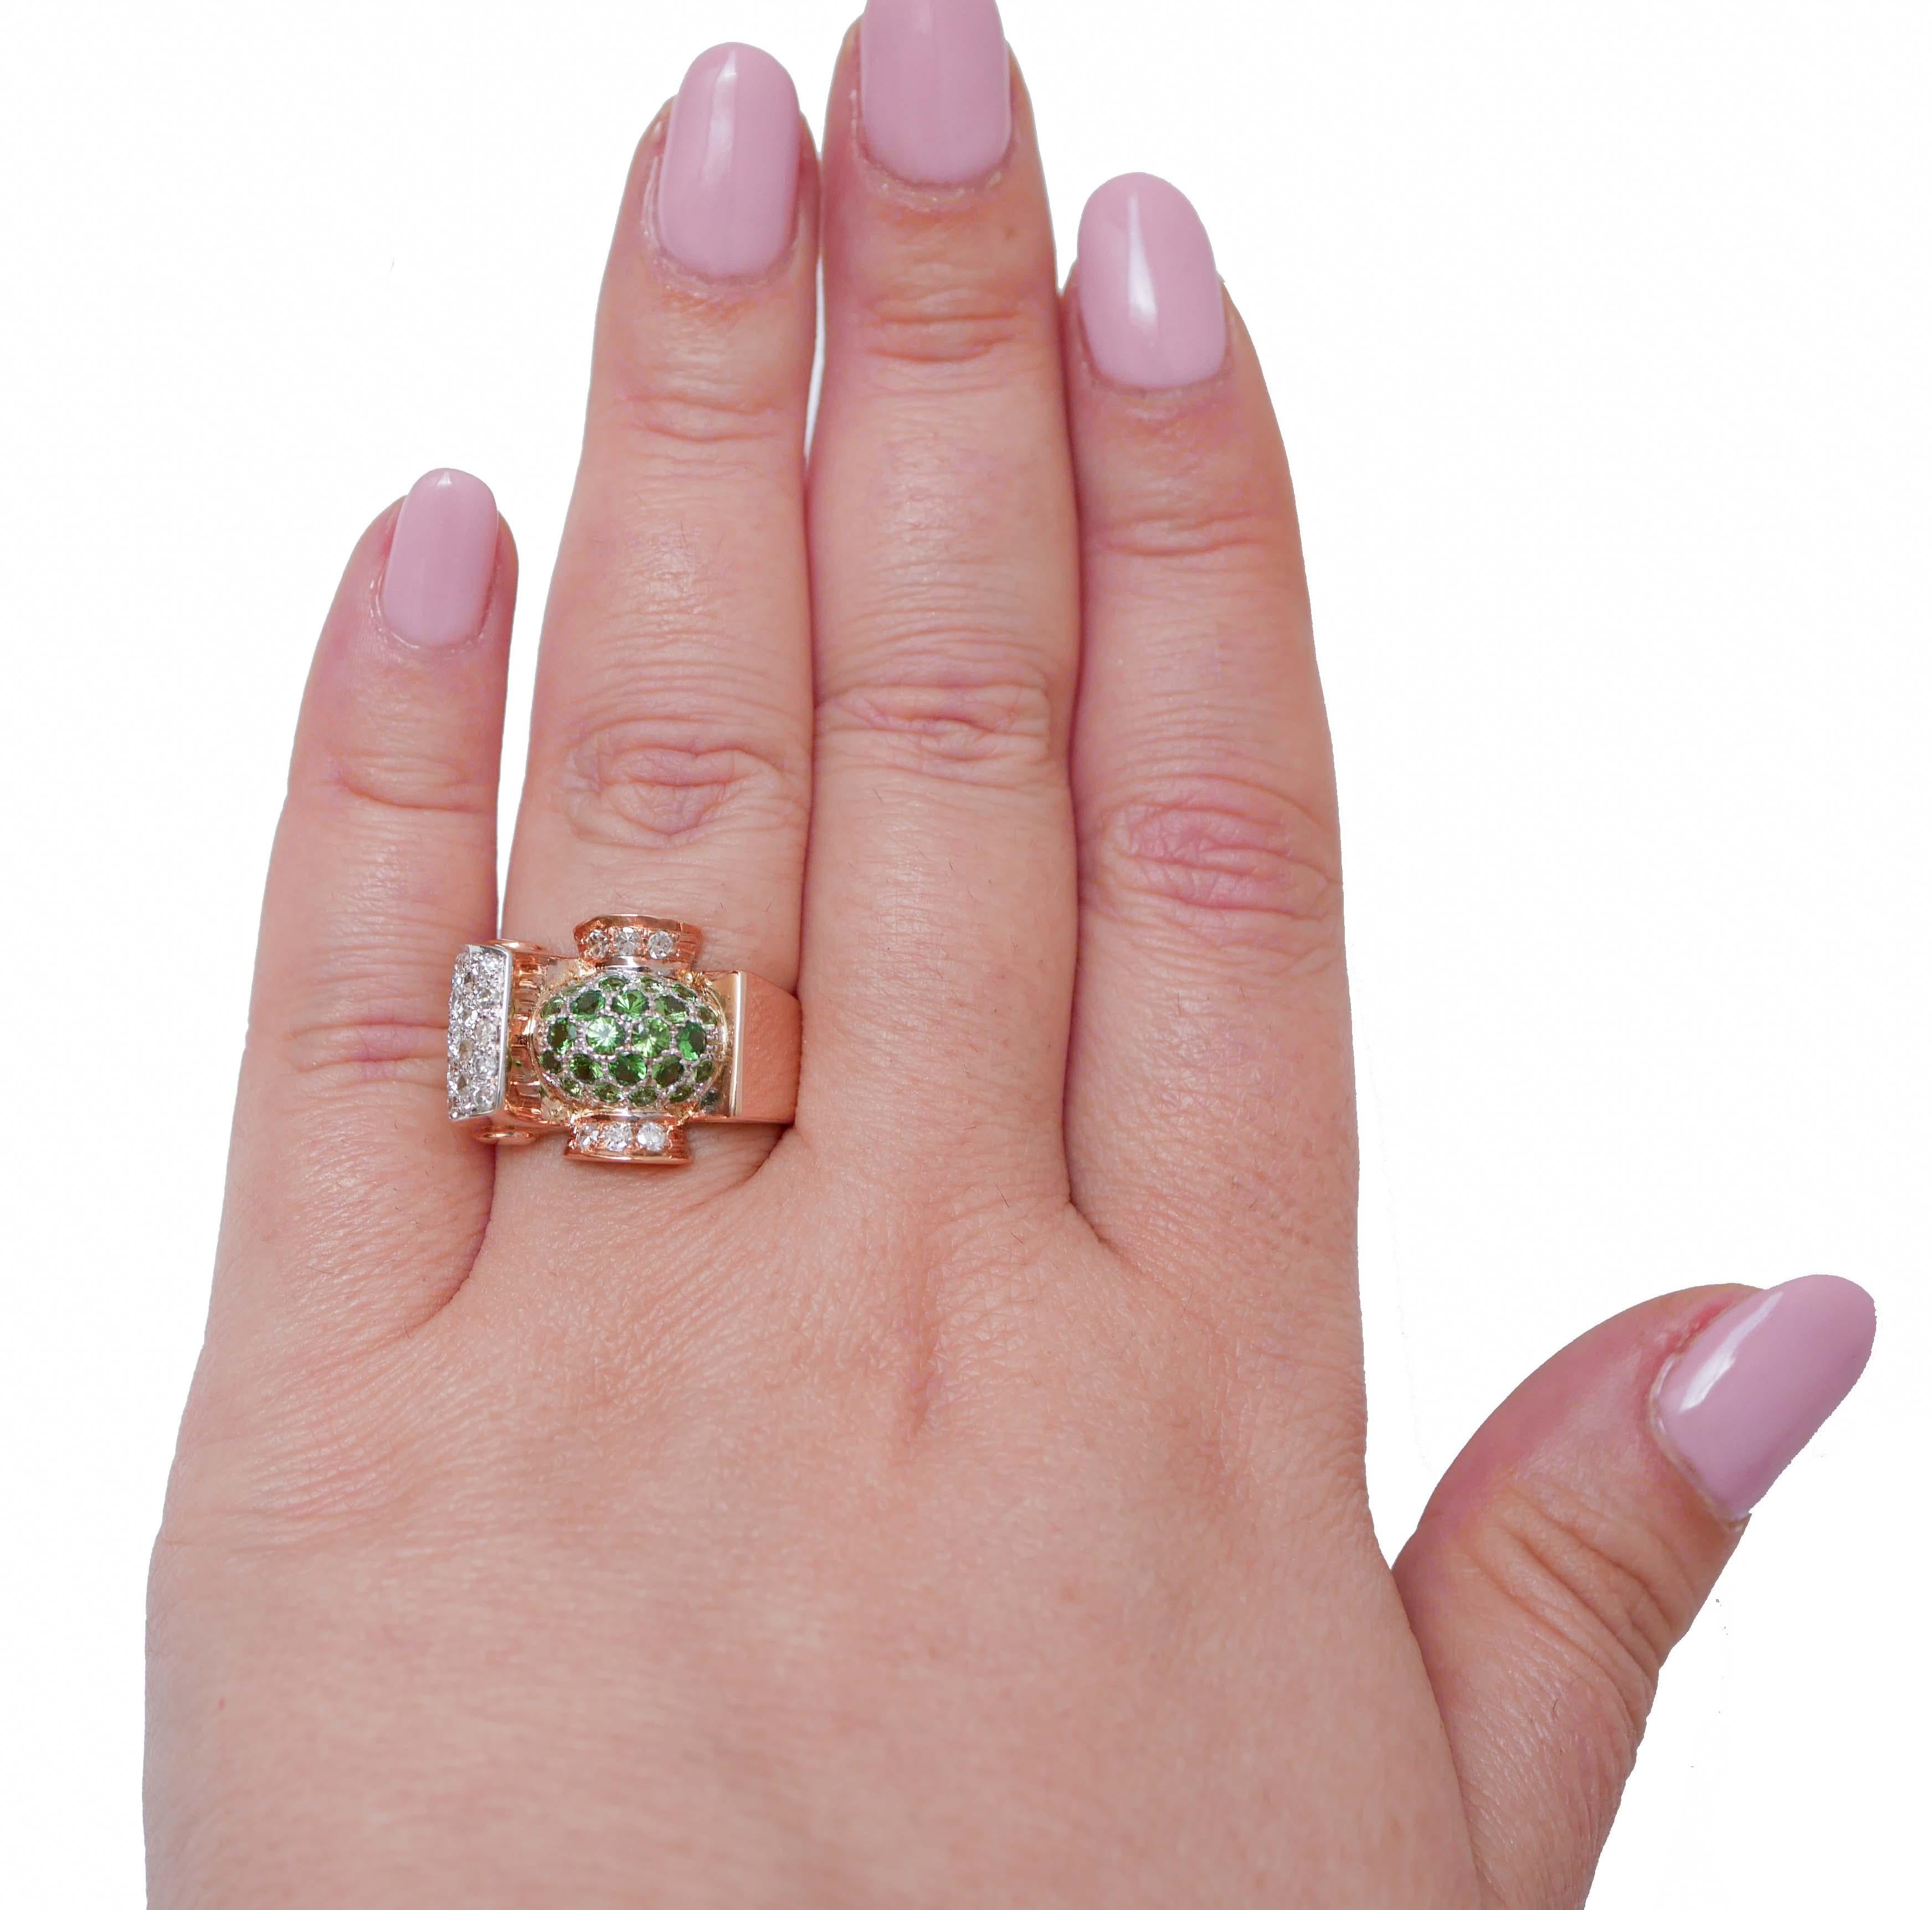 Mixed Cut Tsavorite, Diamonds, 18 Karat Rose Gold Ring. For Sale